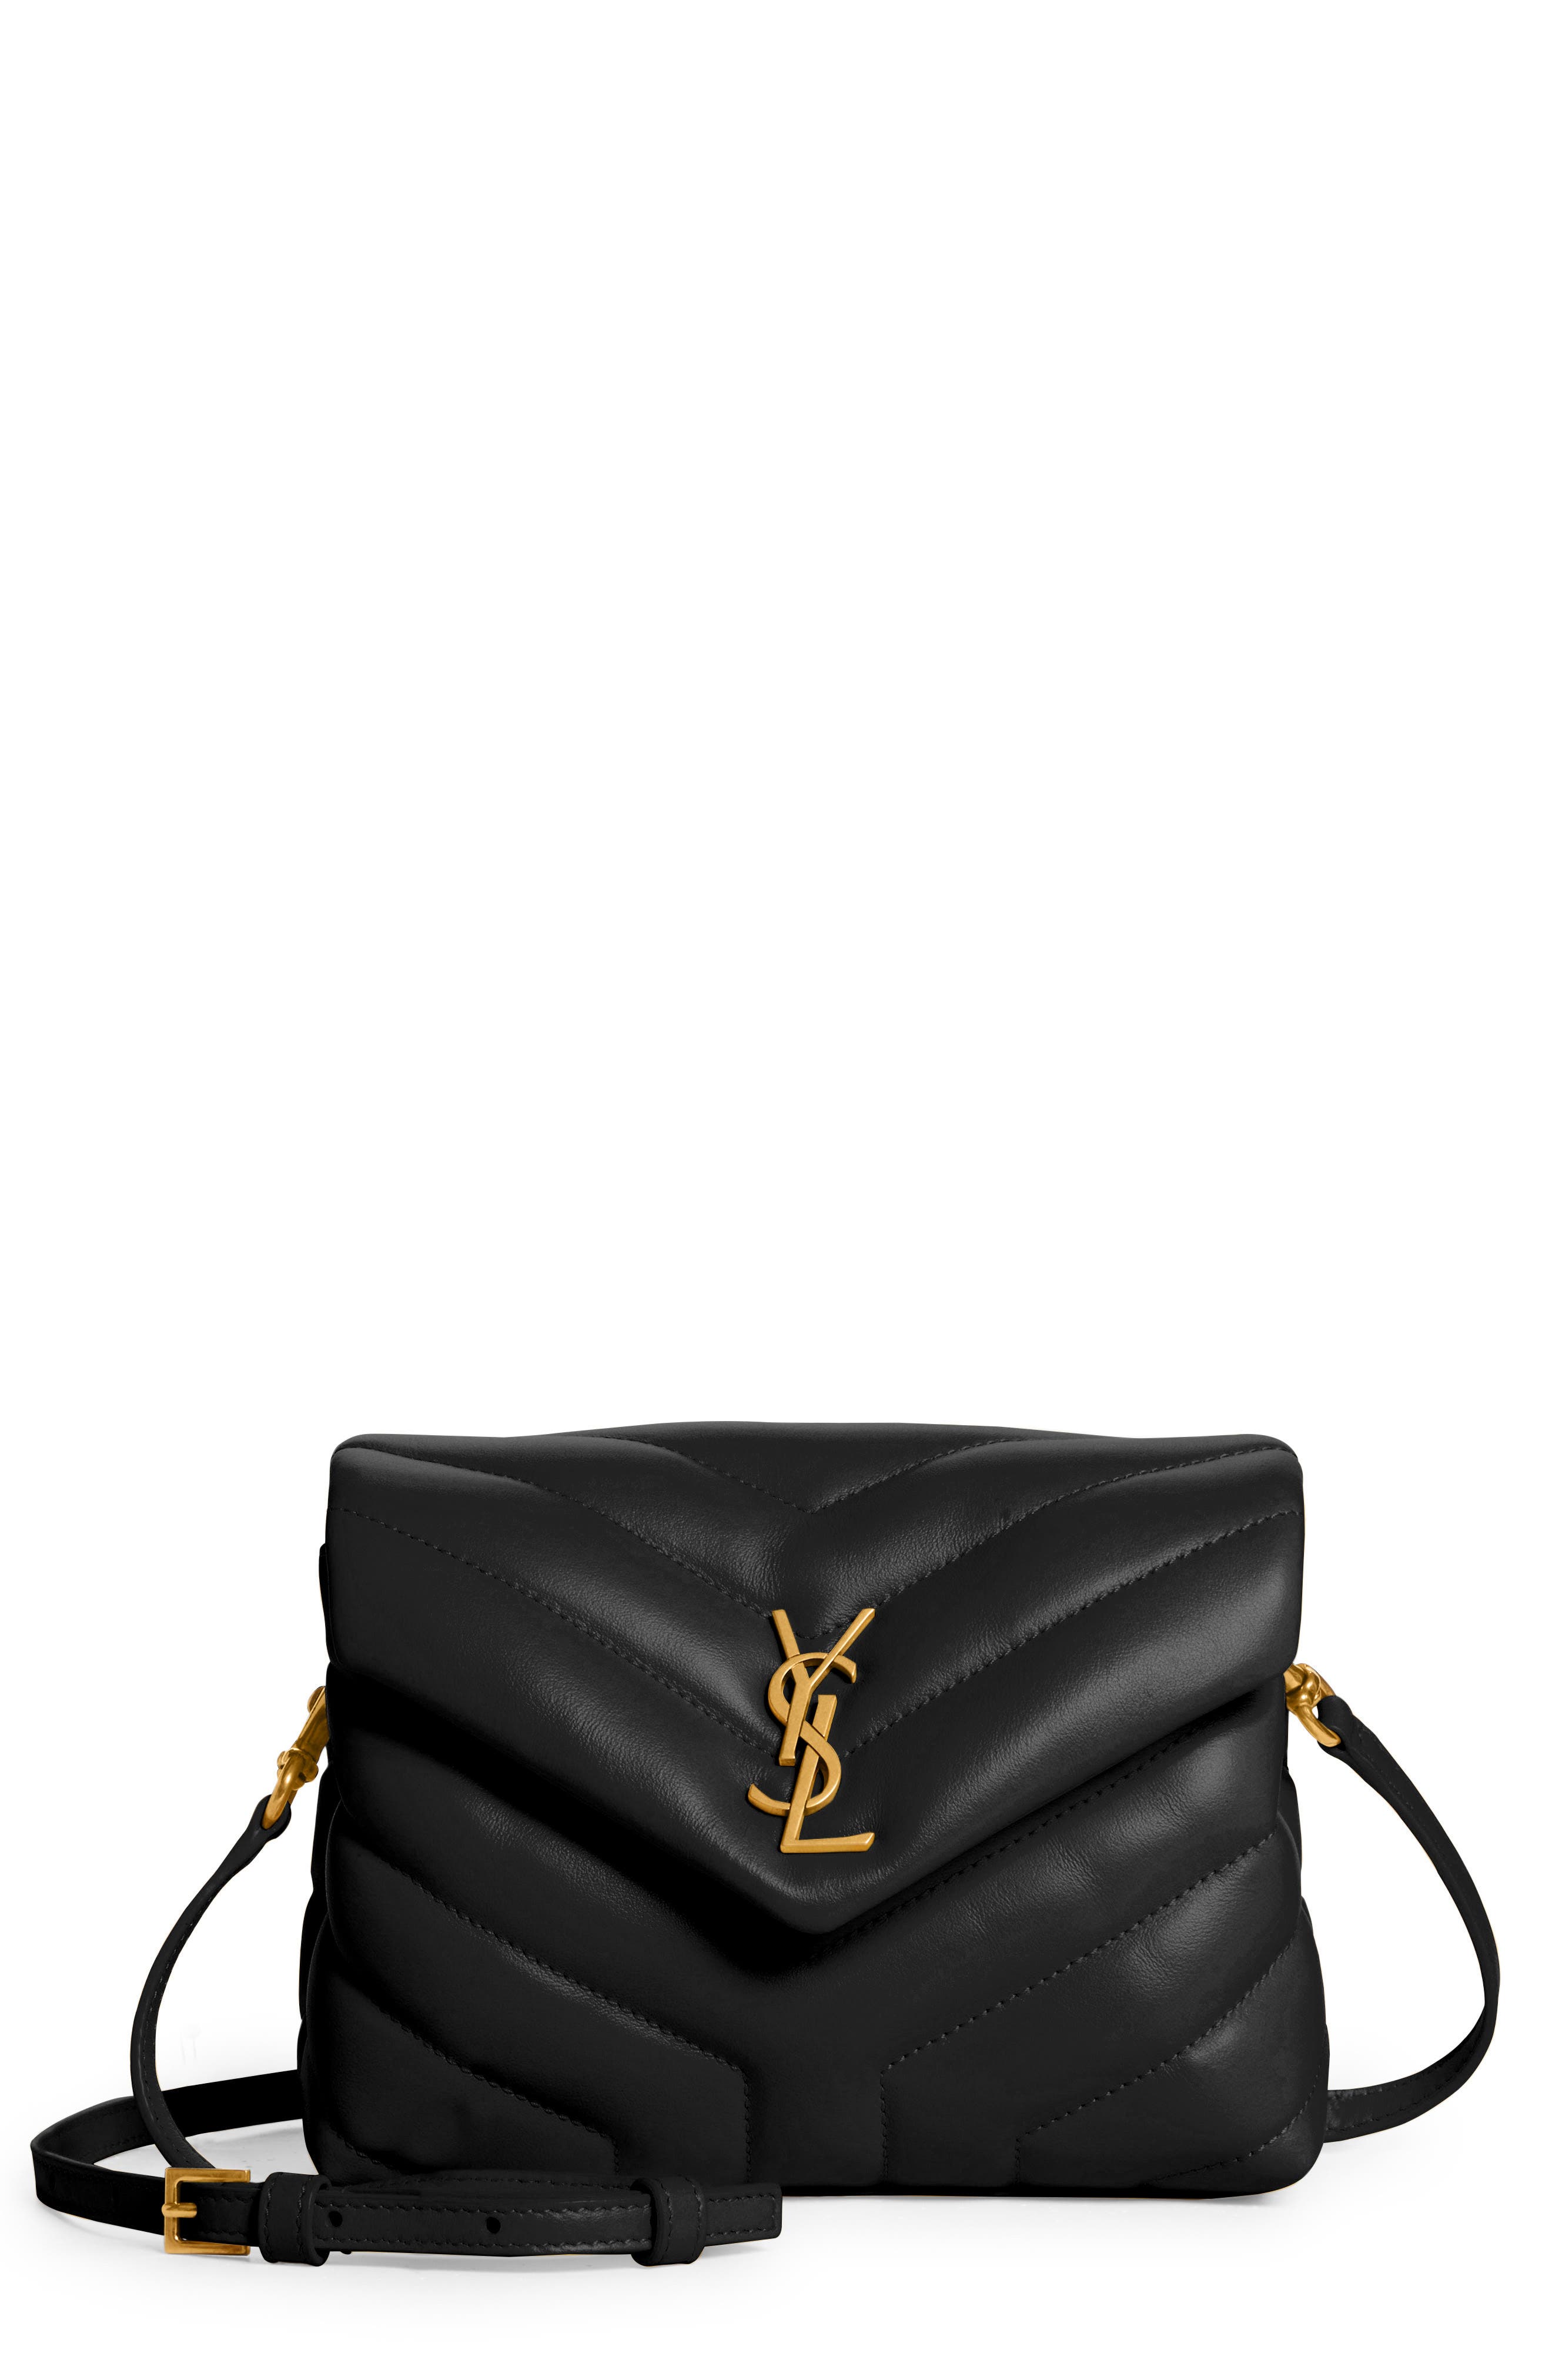 qqqwjf.black luxury handbags , Off 63%,shorin-ryu.net